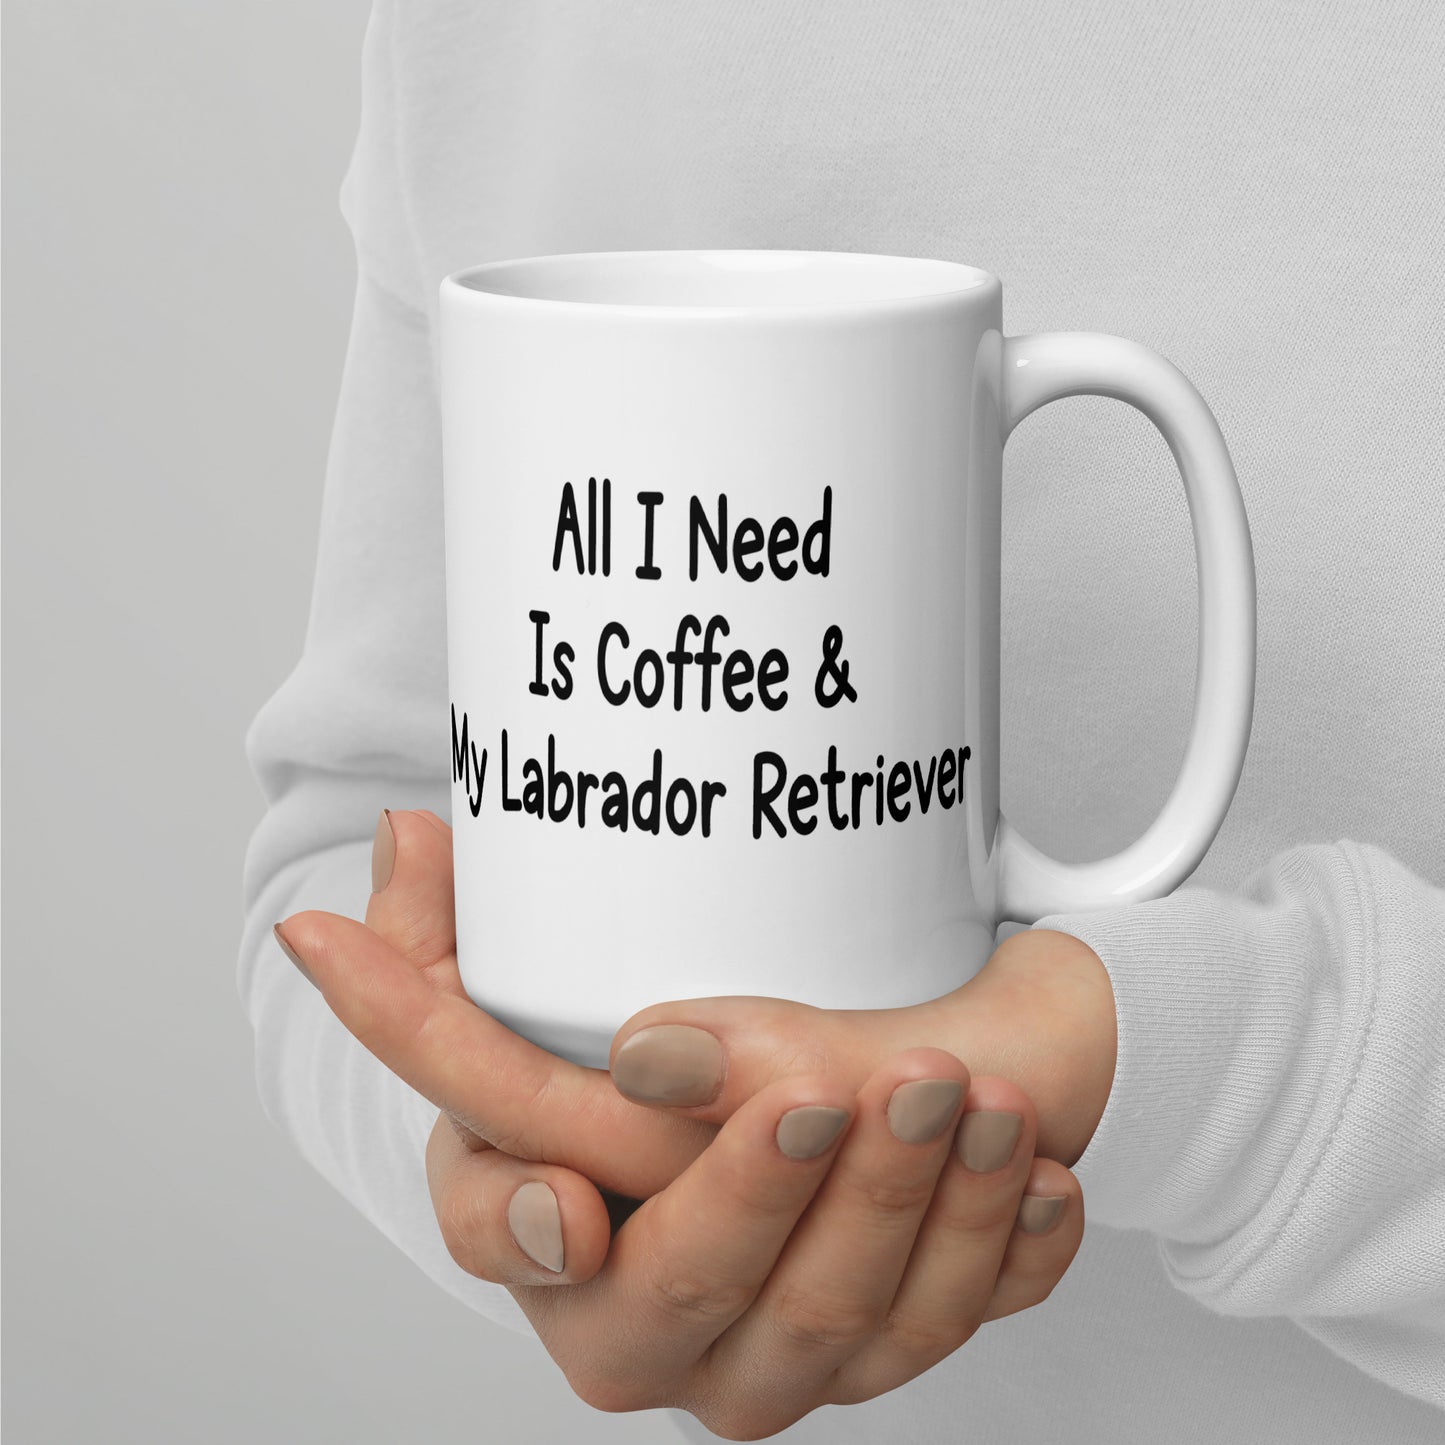 All I need is coffee & my Labrador Retriever mug by Dog Artistry.